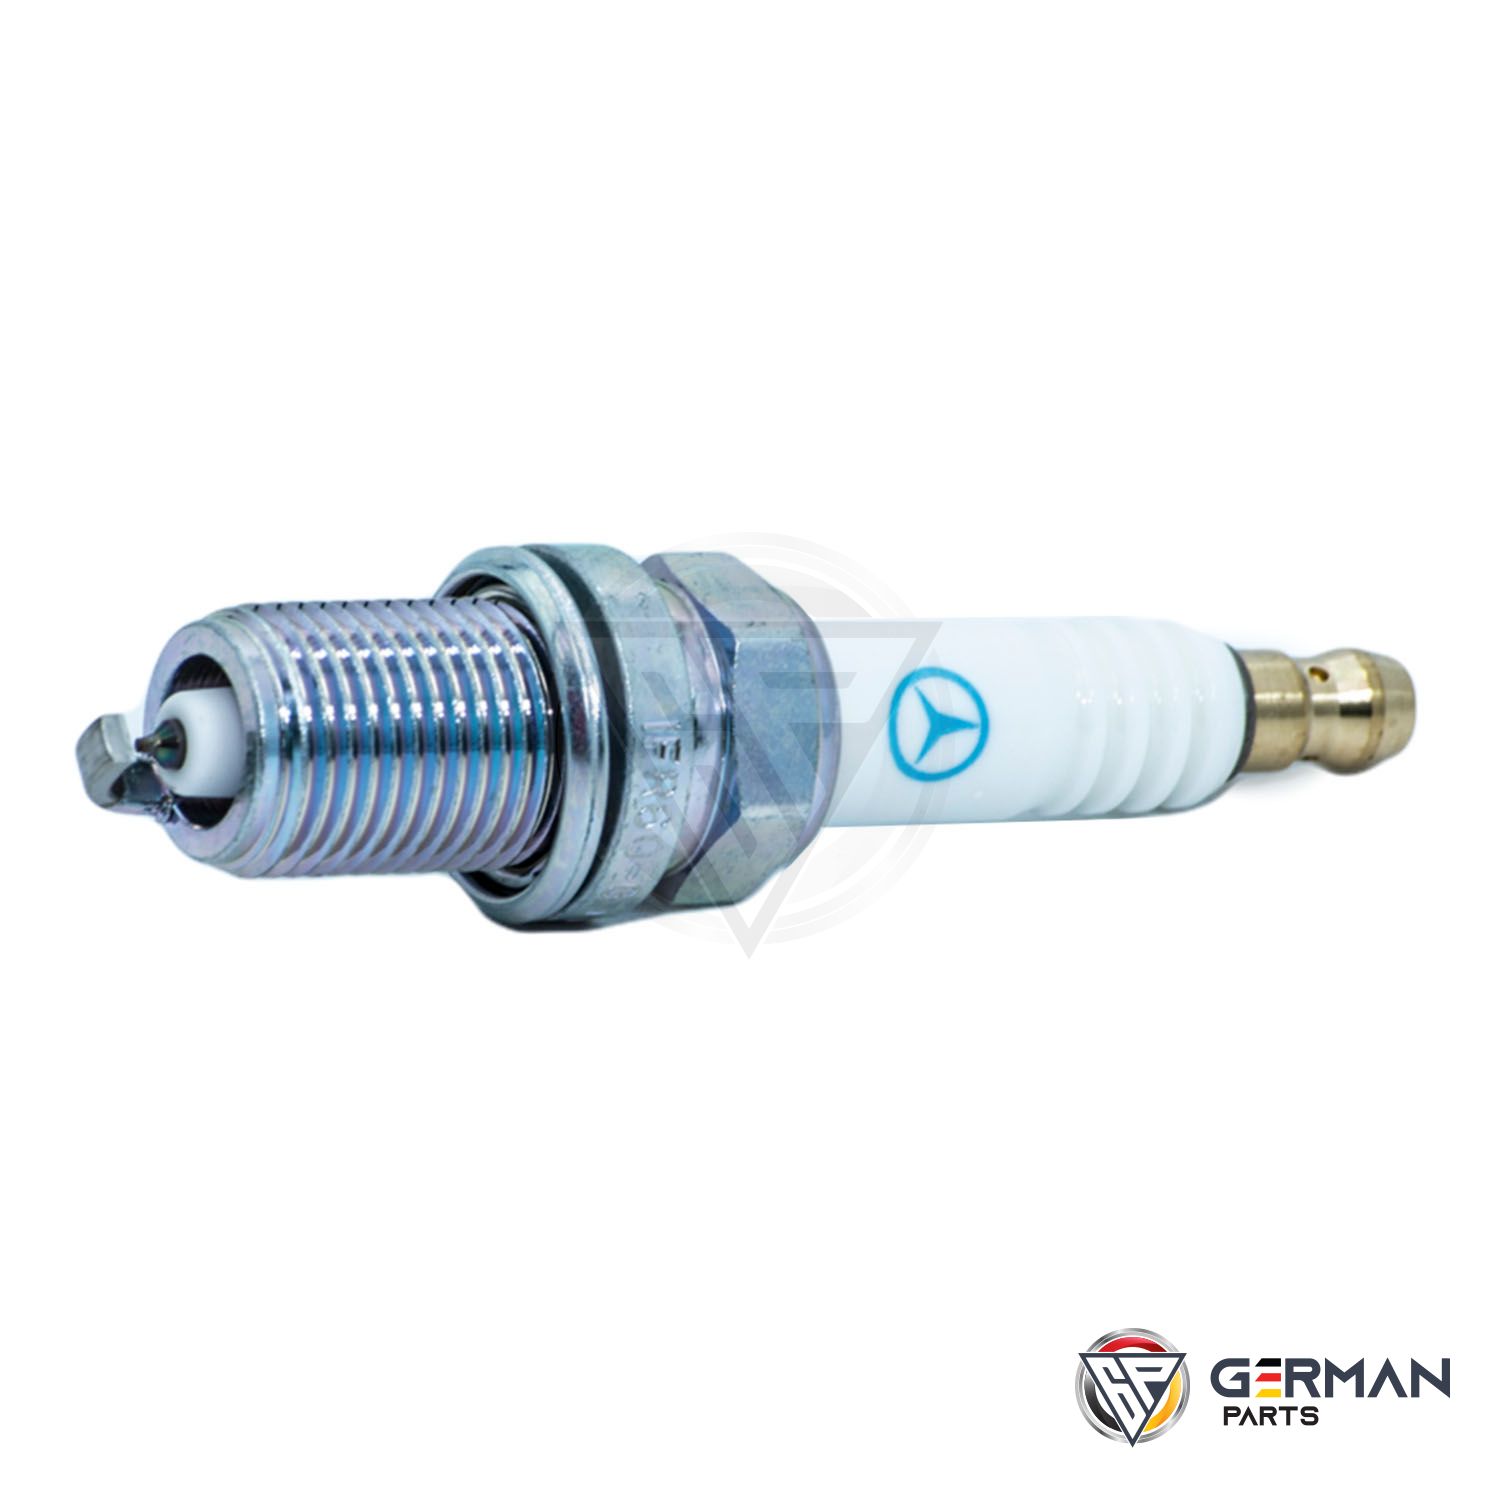 Buy Mercedes Benz Spark Plug 0041591403 - German Parts